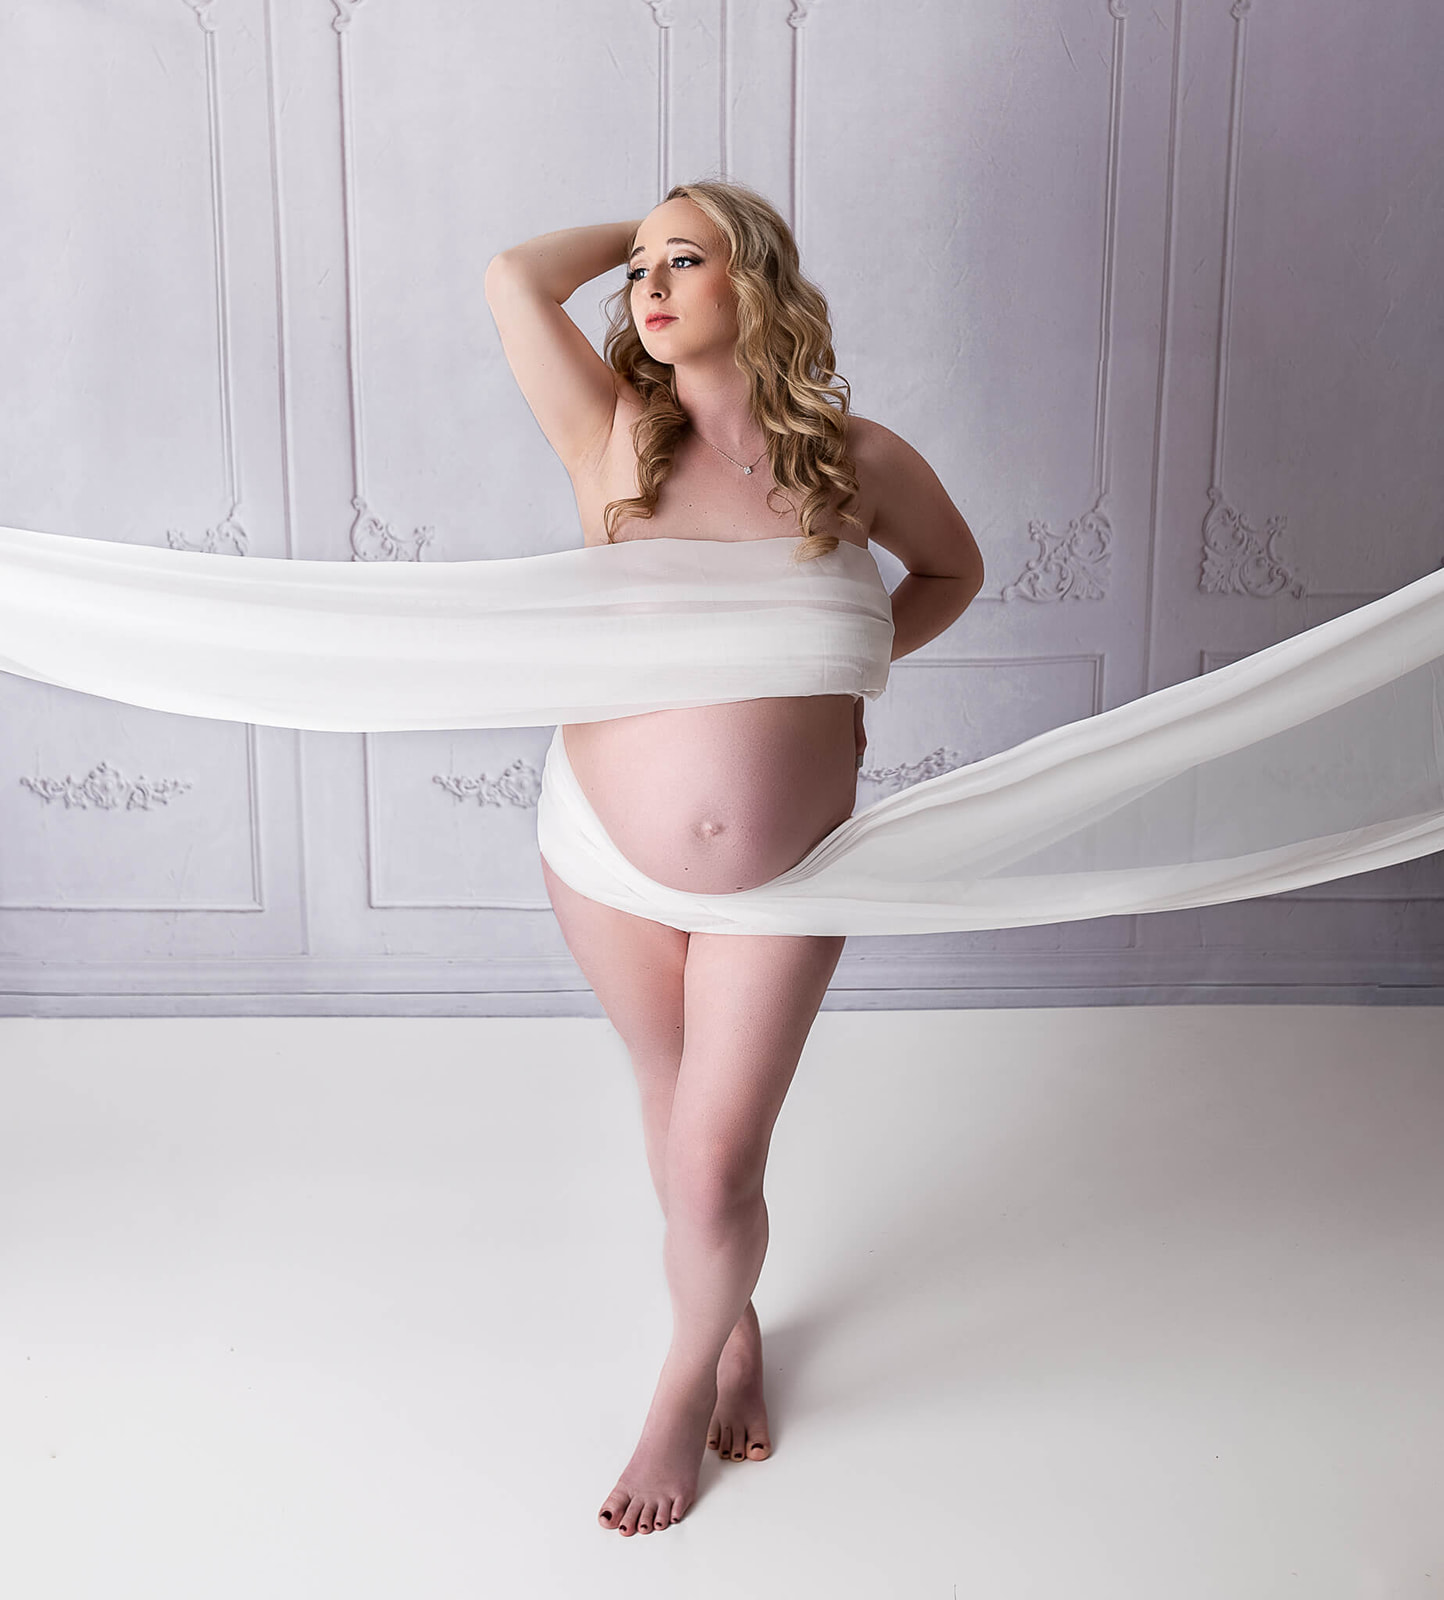 Cleveland, OH newborn photographer capuring mama during her maternity photoshoot